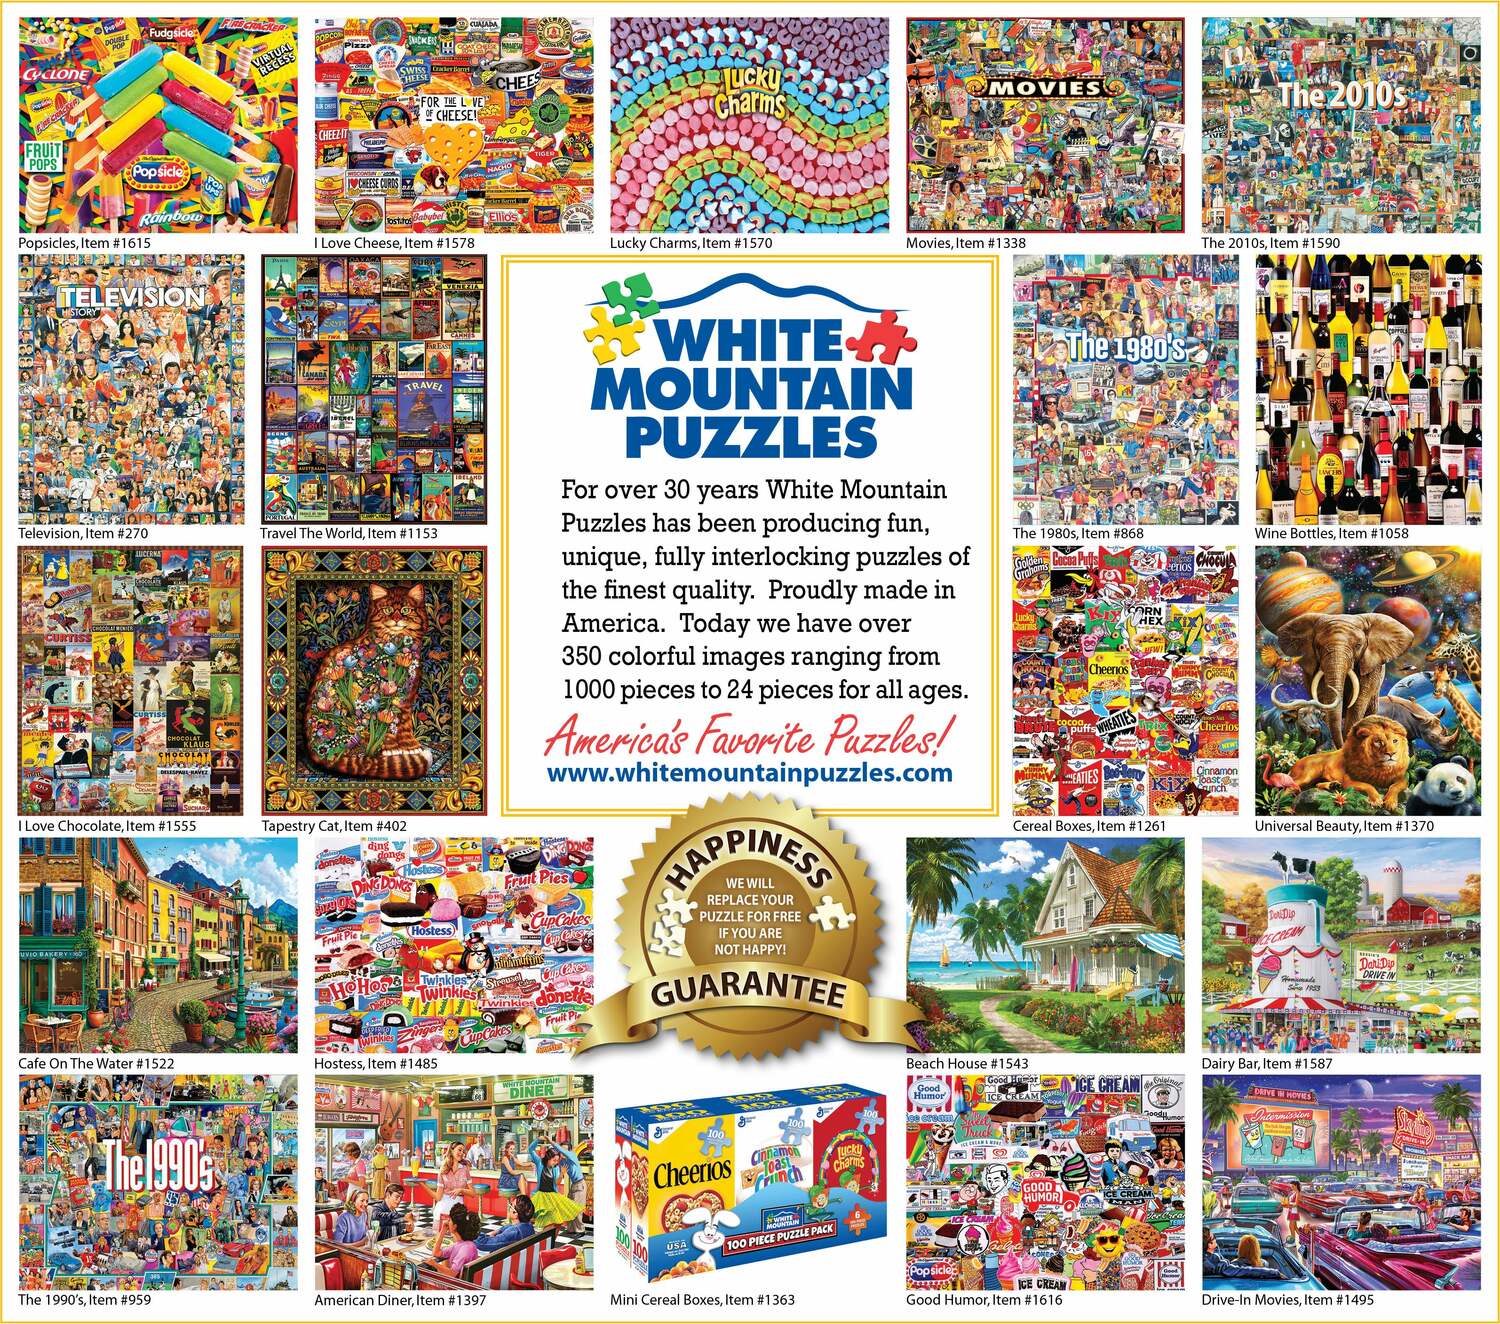 Grand Canyon - 1000 Piece Jigsaw Puzzle